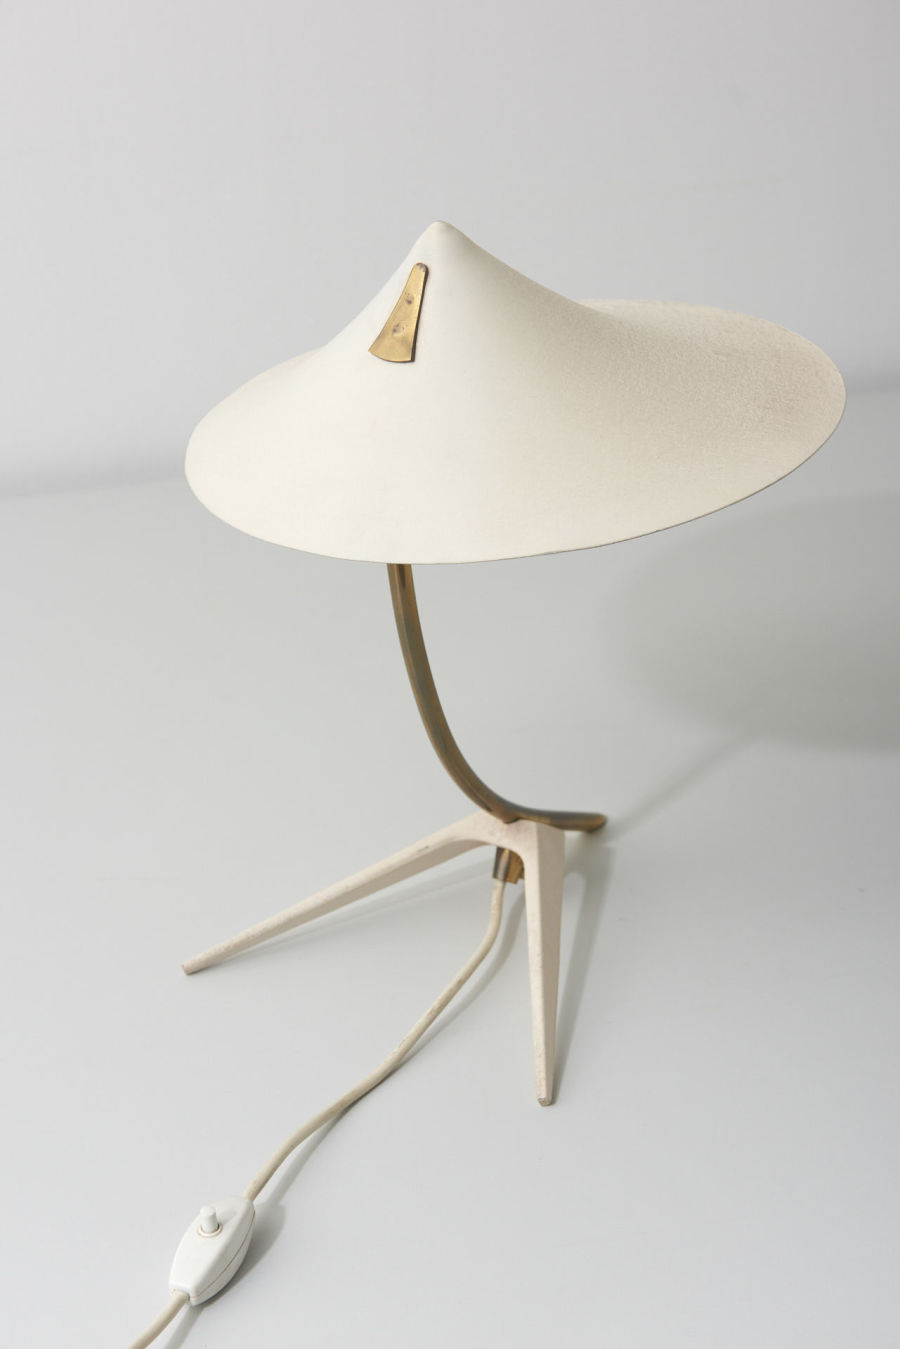 modestfurniture-vintage-1981-desk-lamp-white-shade05